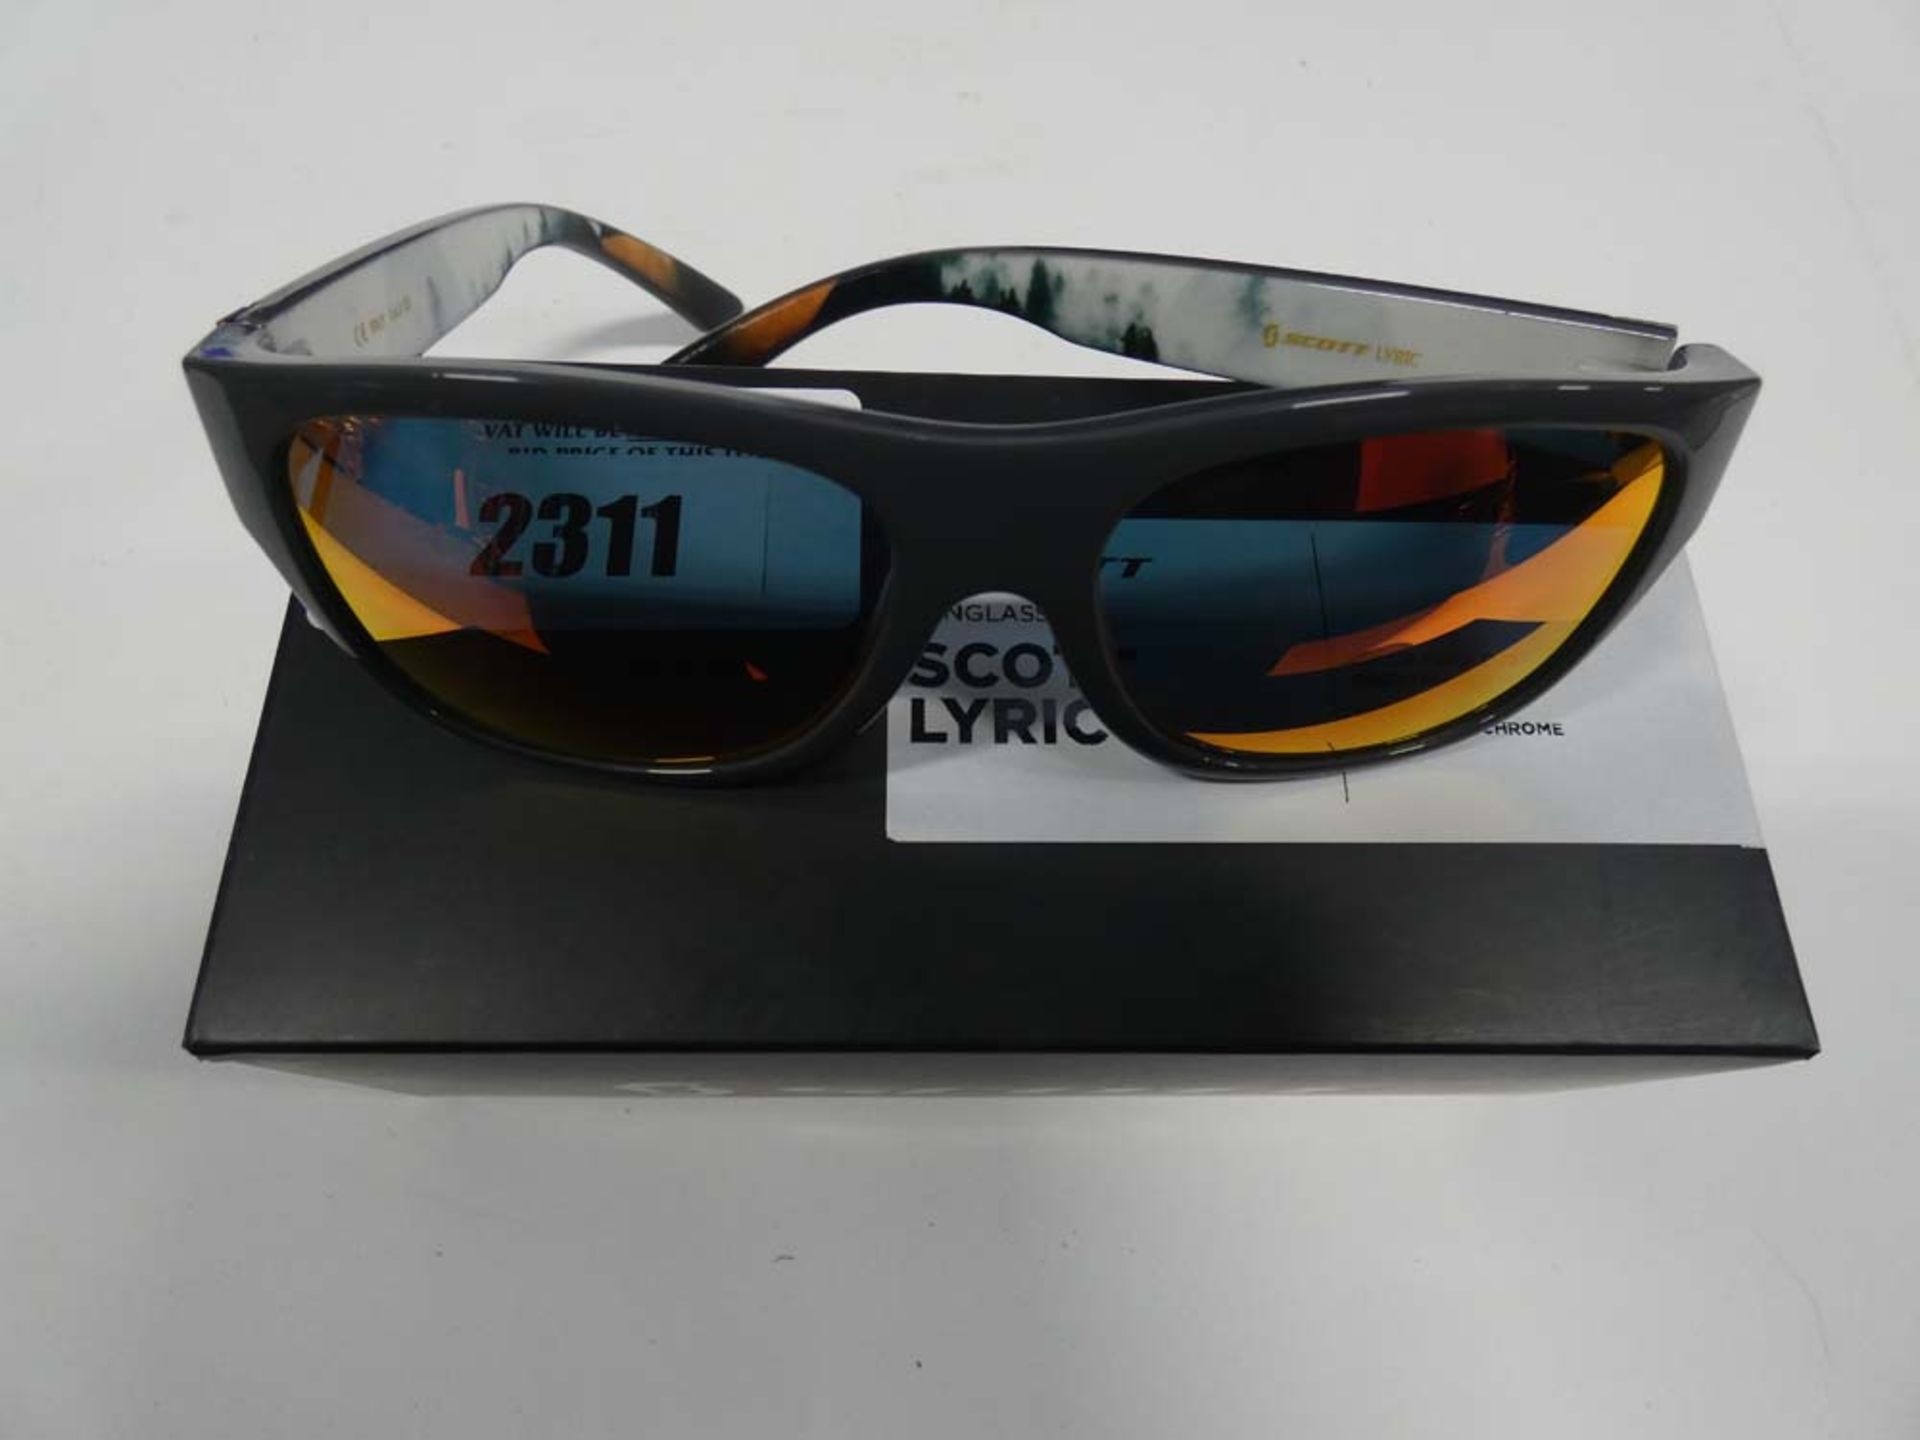 Scott Lyric red/chrome sunglasses in box